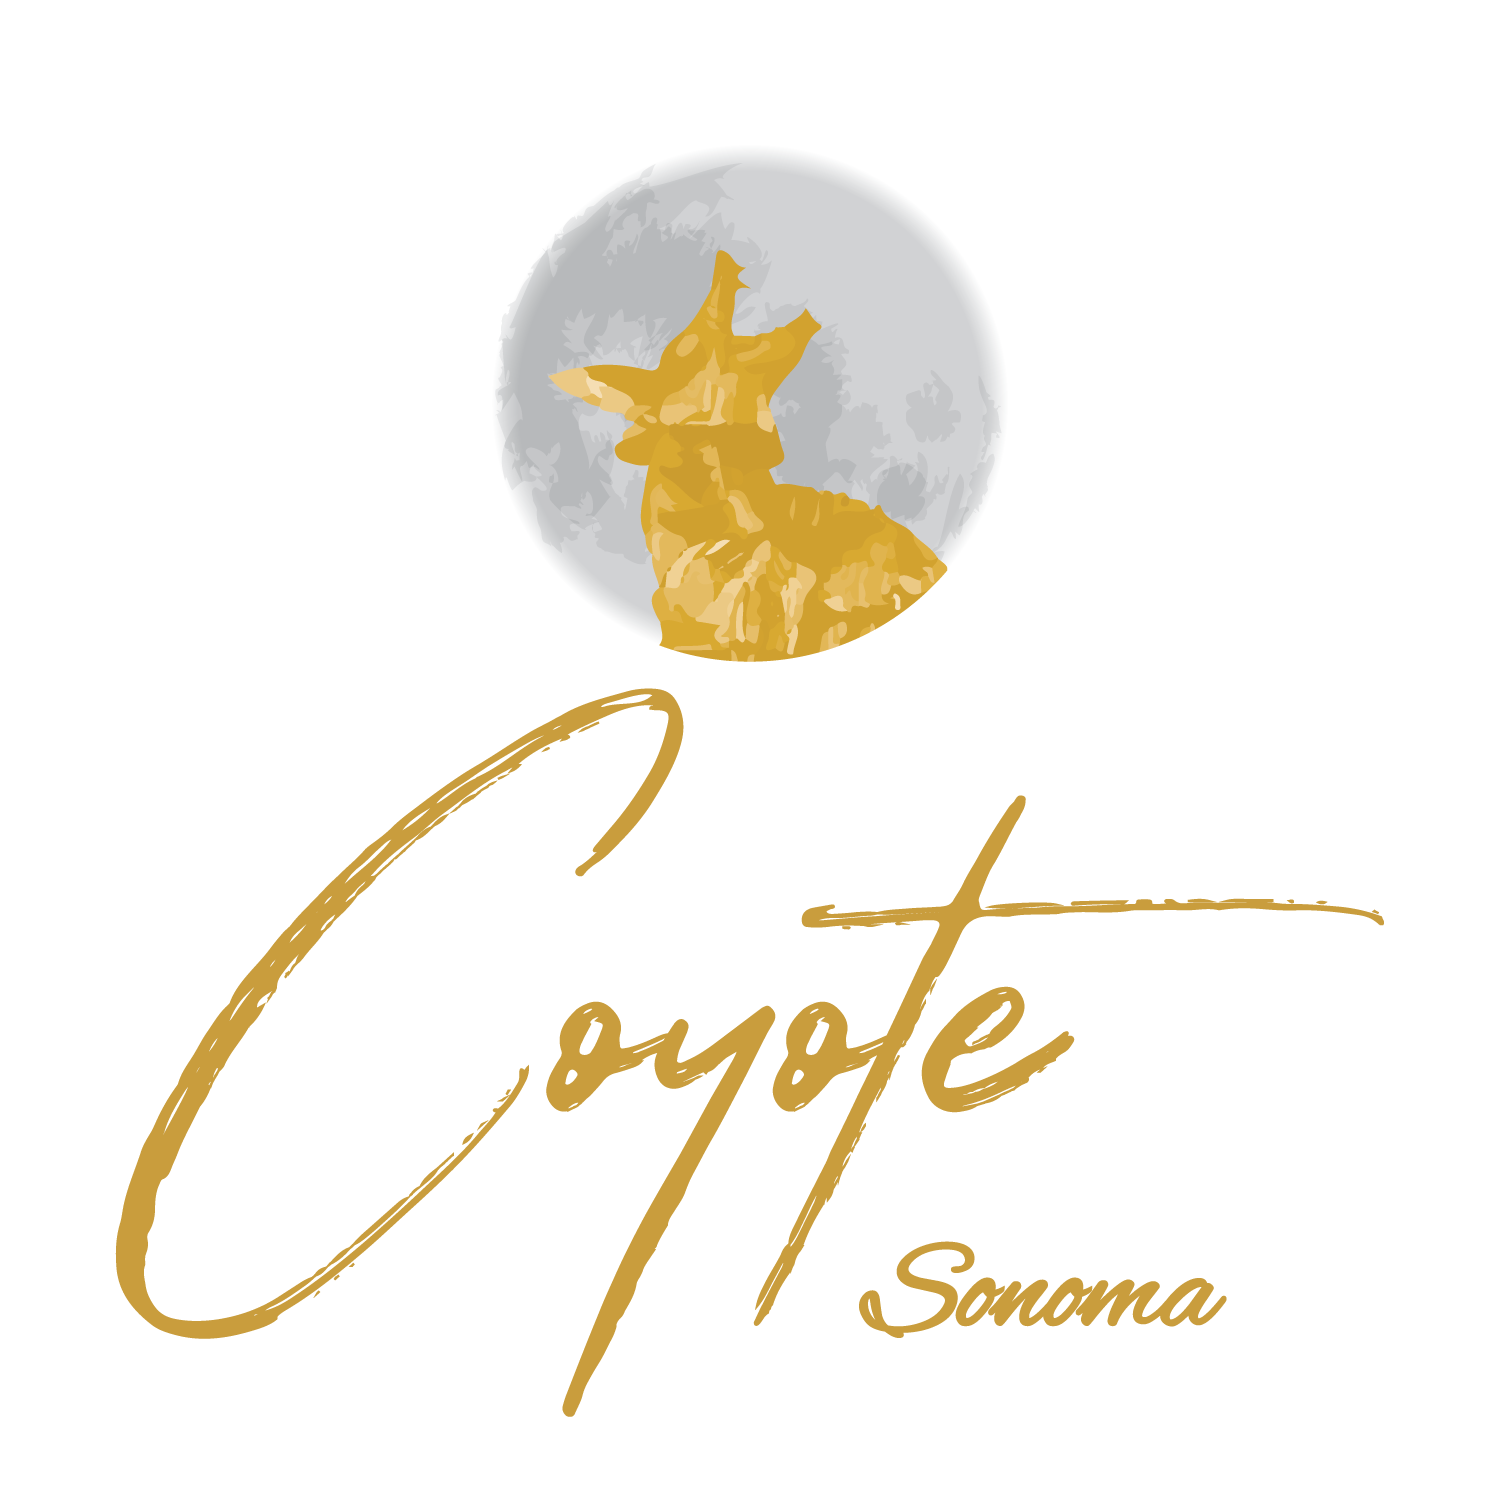 Coyote Sonoma